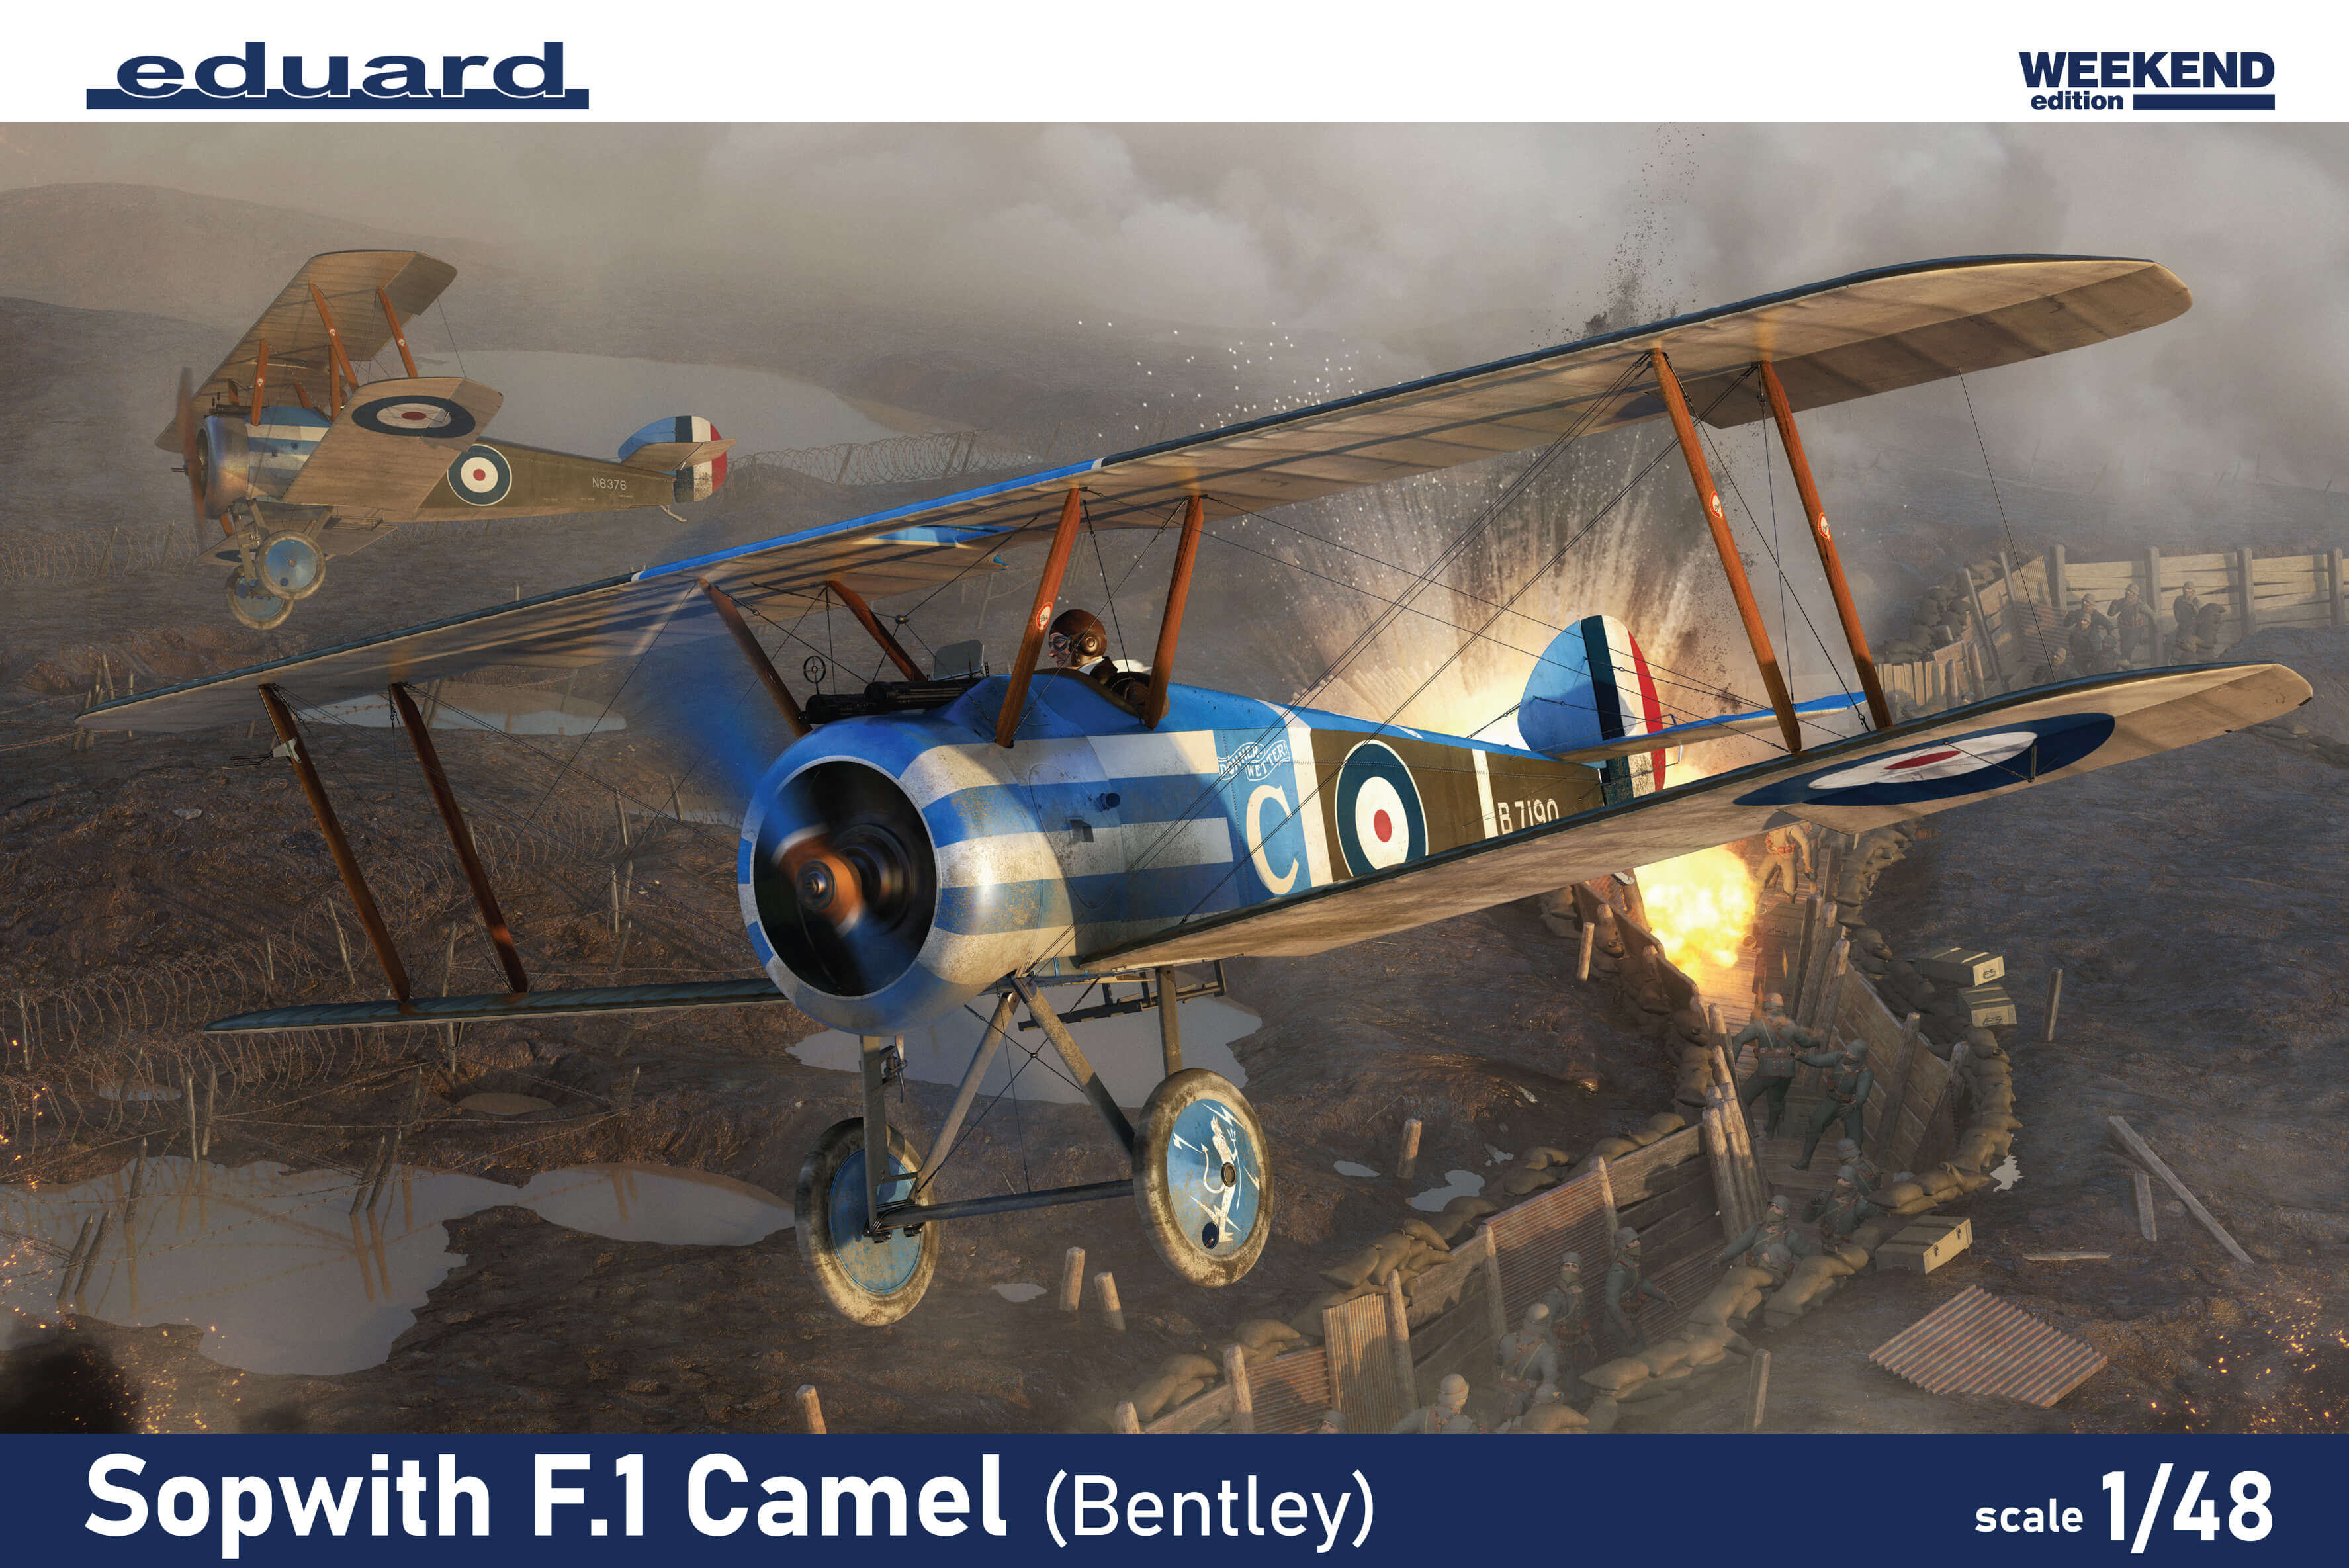 Fotografie 1/48 Sopwith F.1 Camel (Bentley) (Weekend edition)